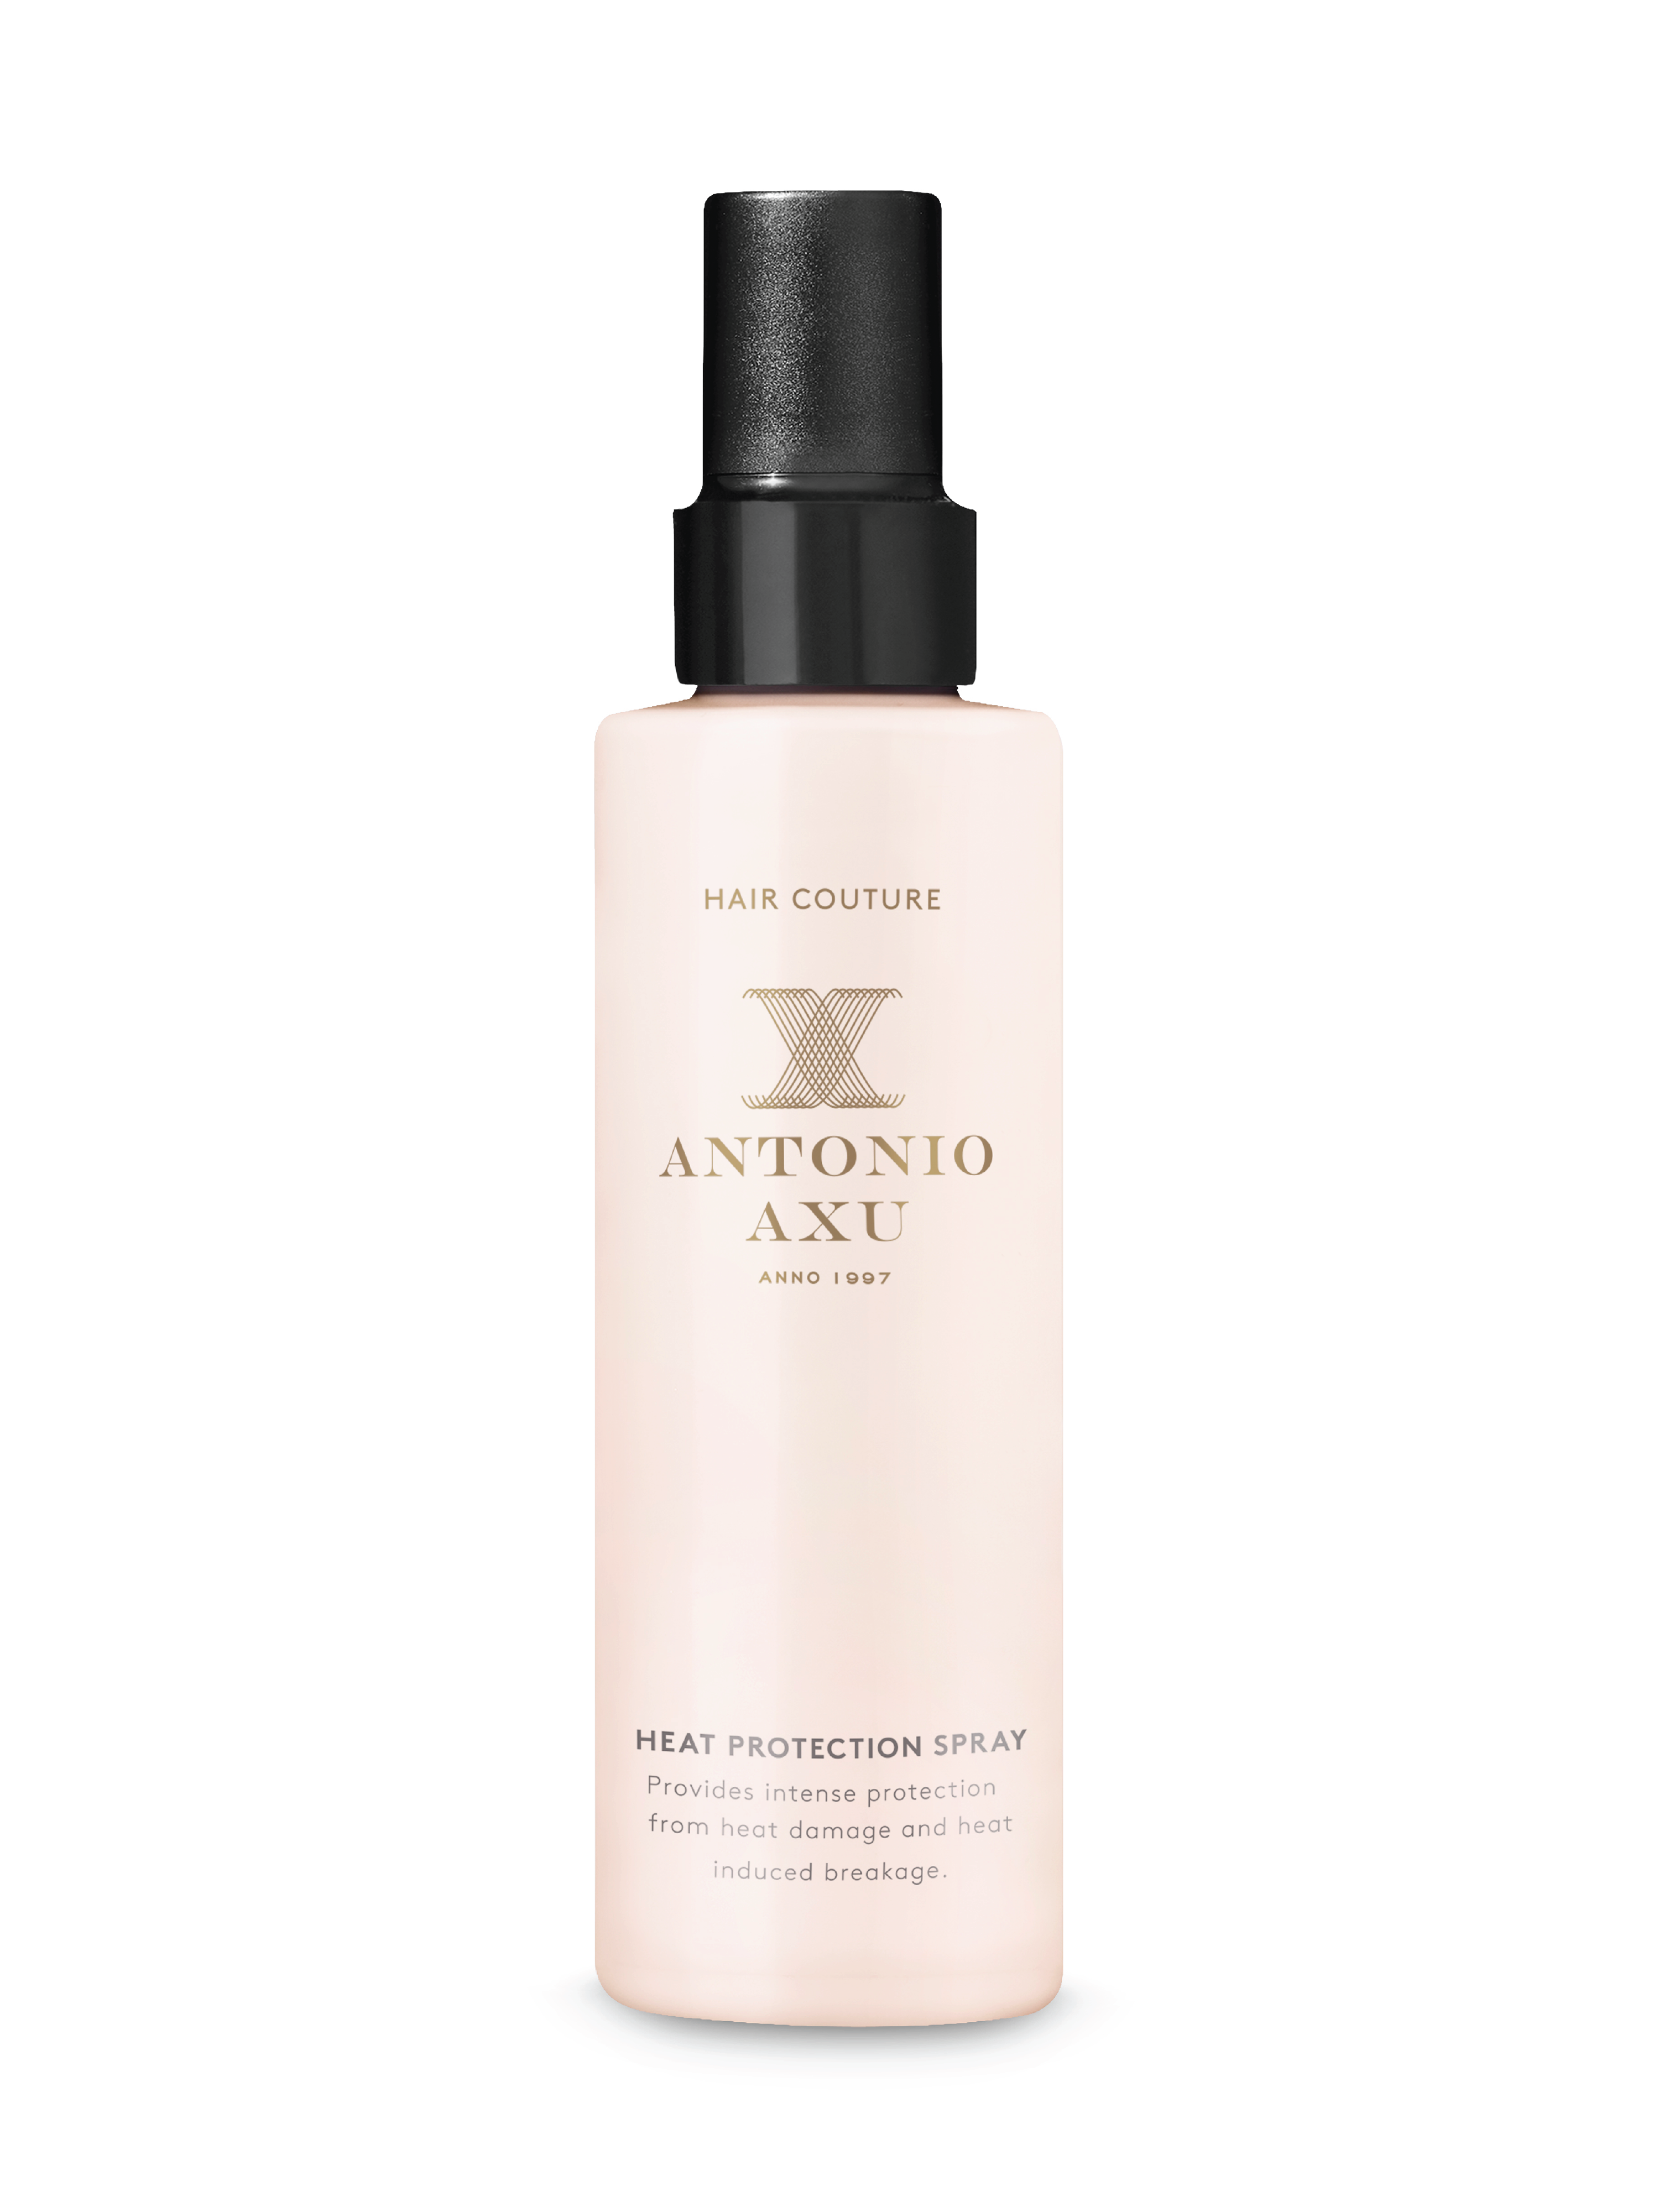 Antonio Axu Heat Protection Spray, 150 ml